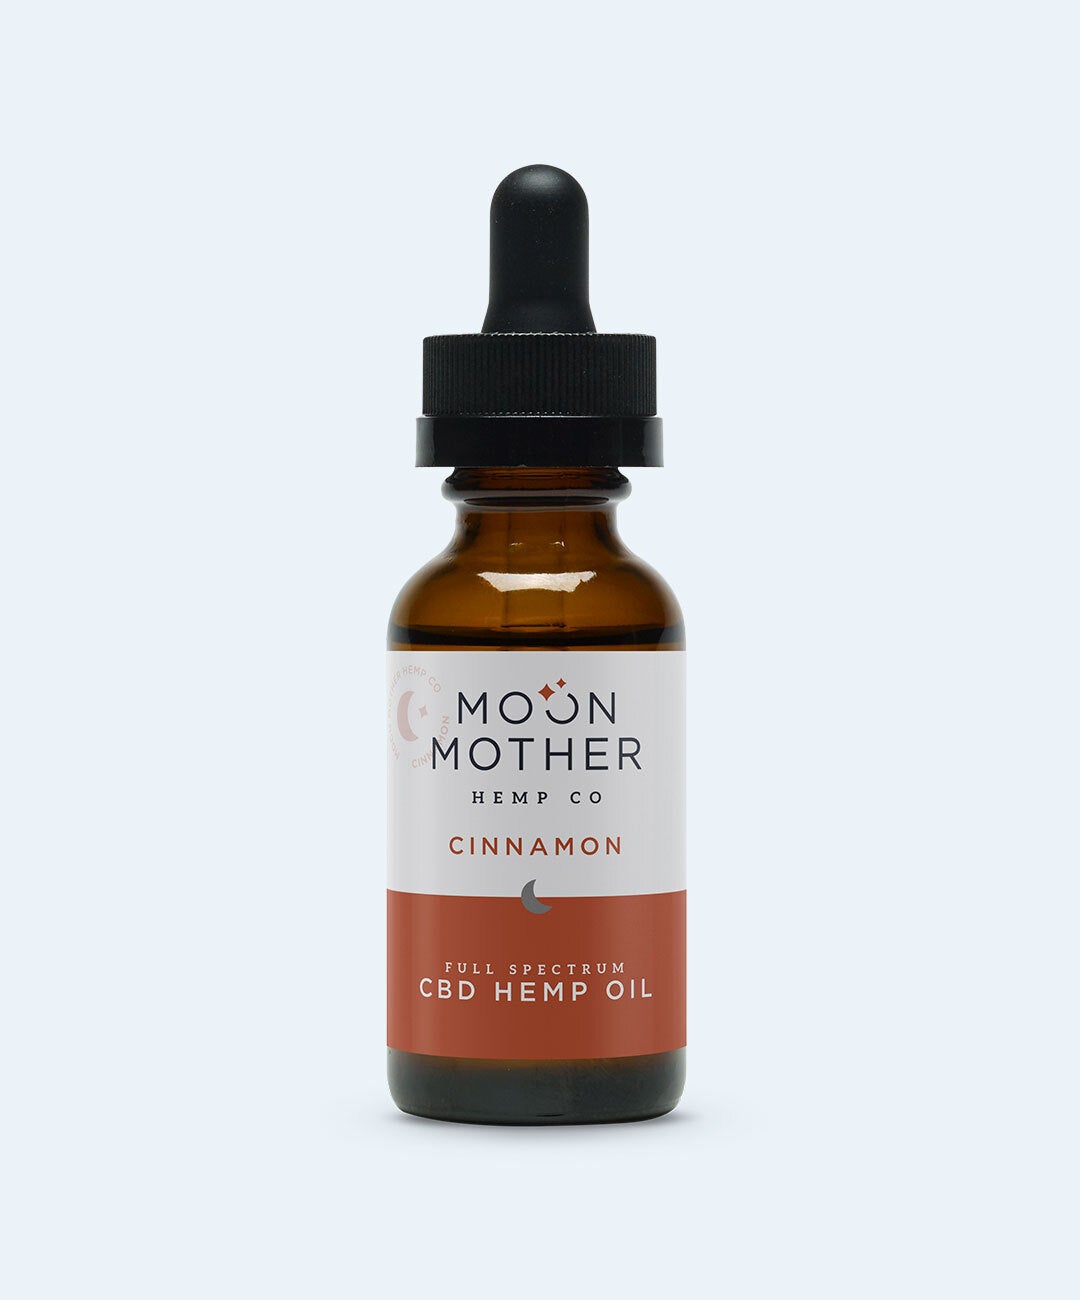 Moon Mother Organic Full Spectrum CBD Hemp Oil Tincture - Cinnamon Flavor